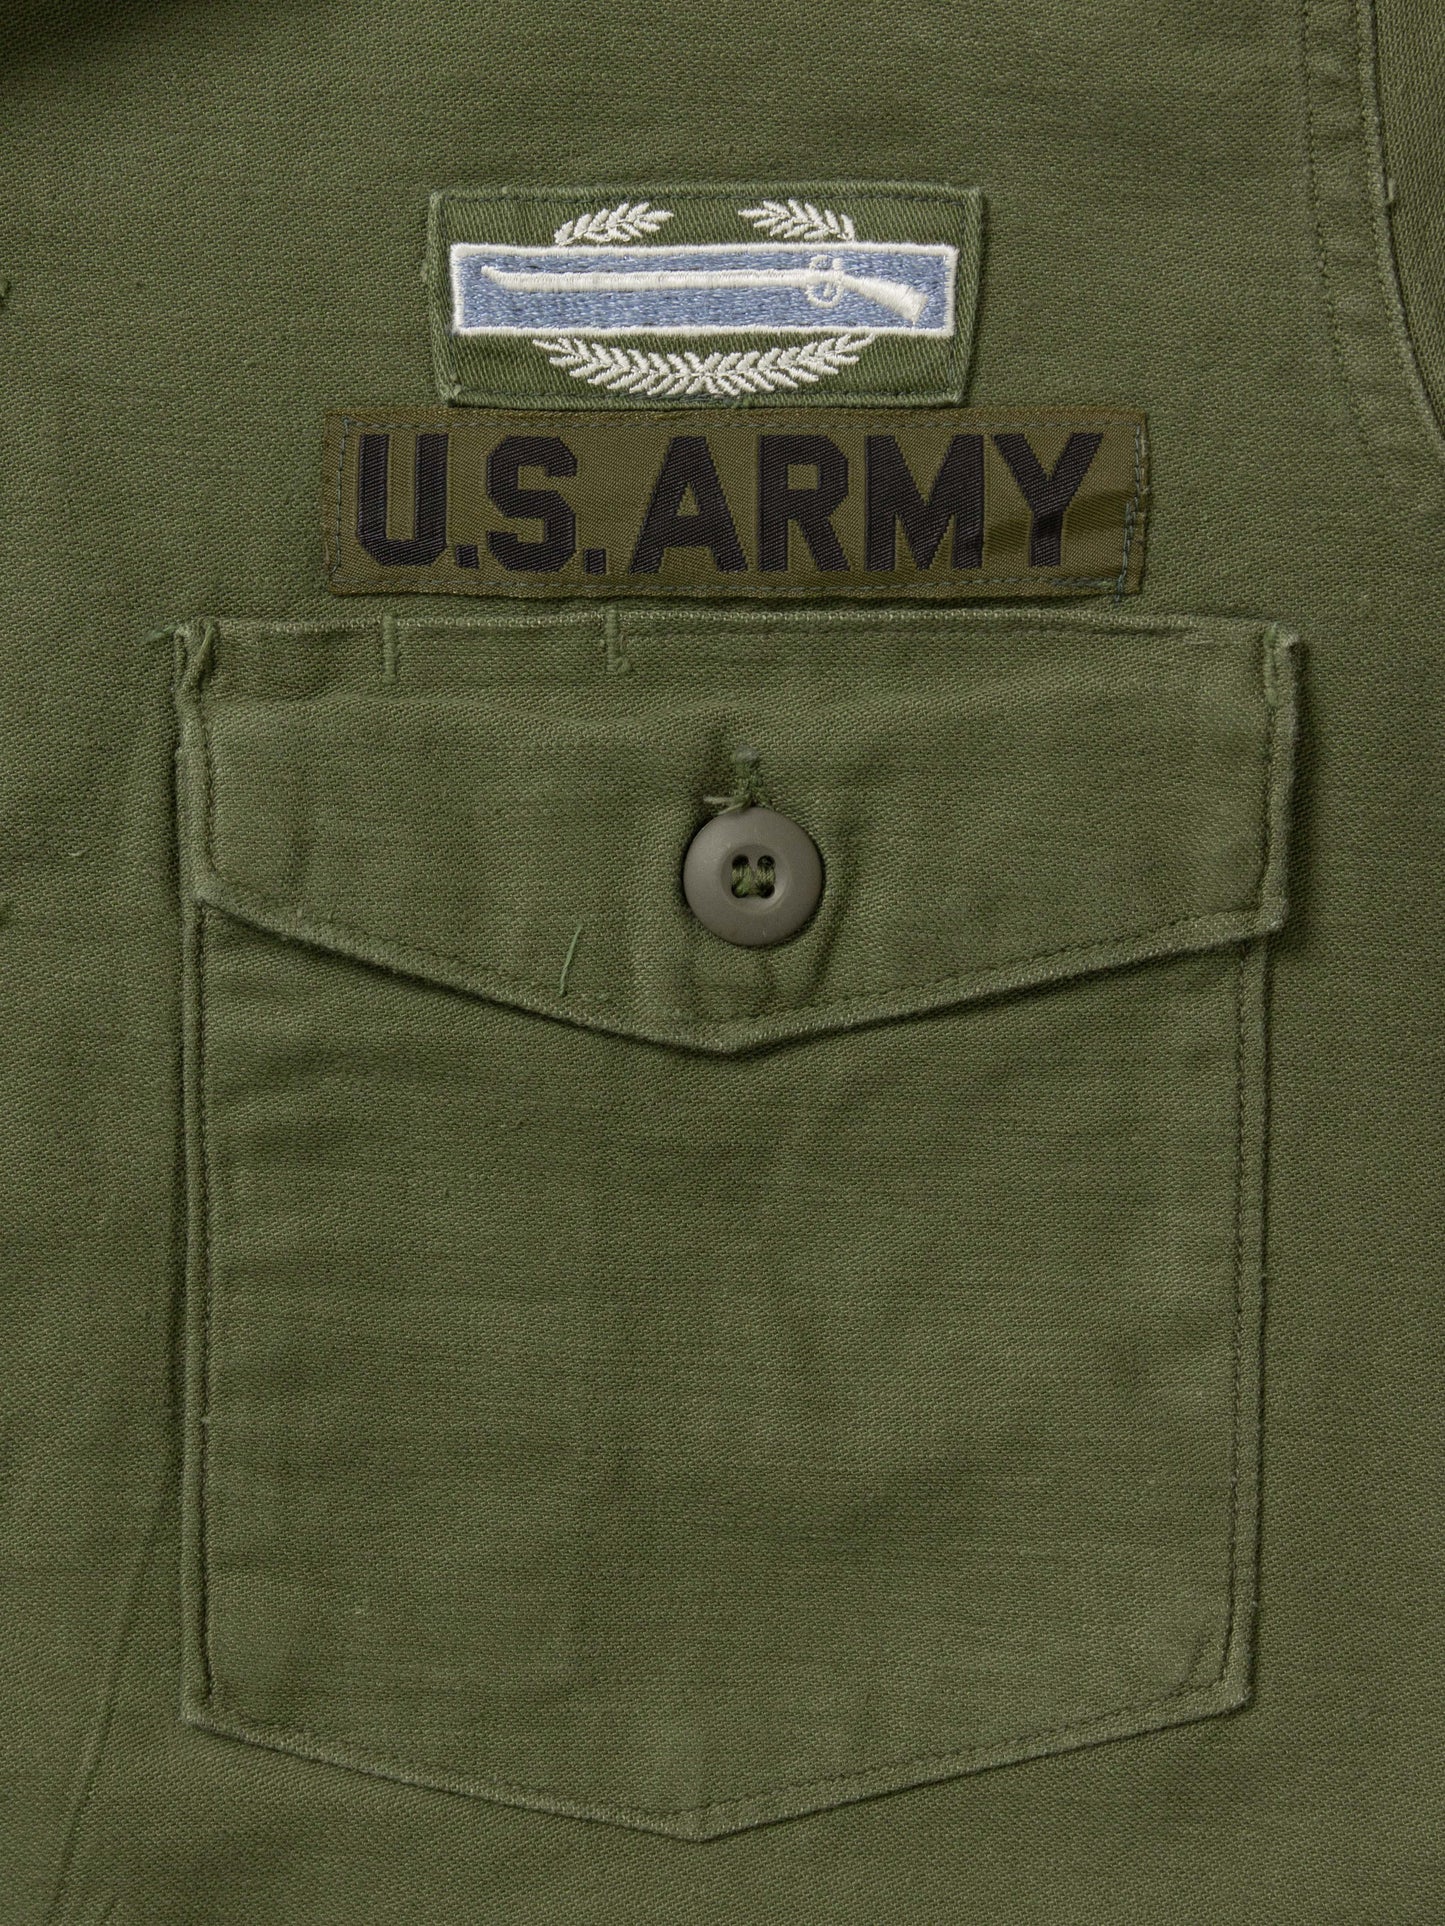 Vtg 1960s US Army OG-107 Fatigue Shirt (M)